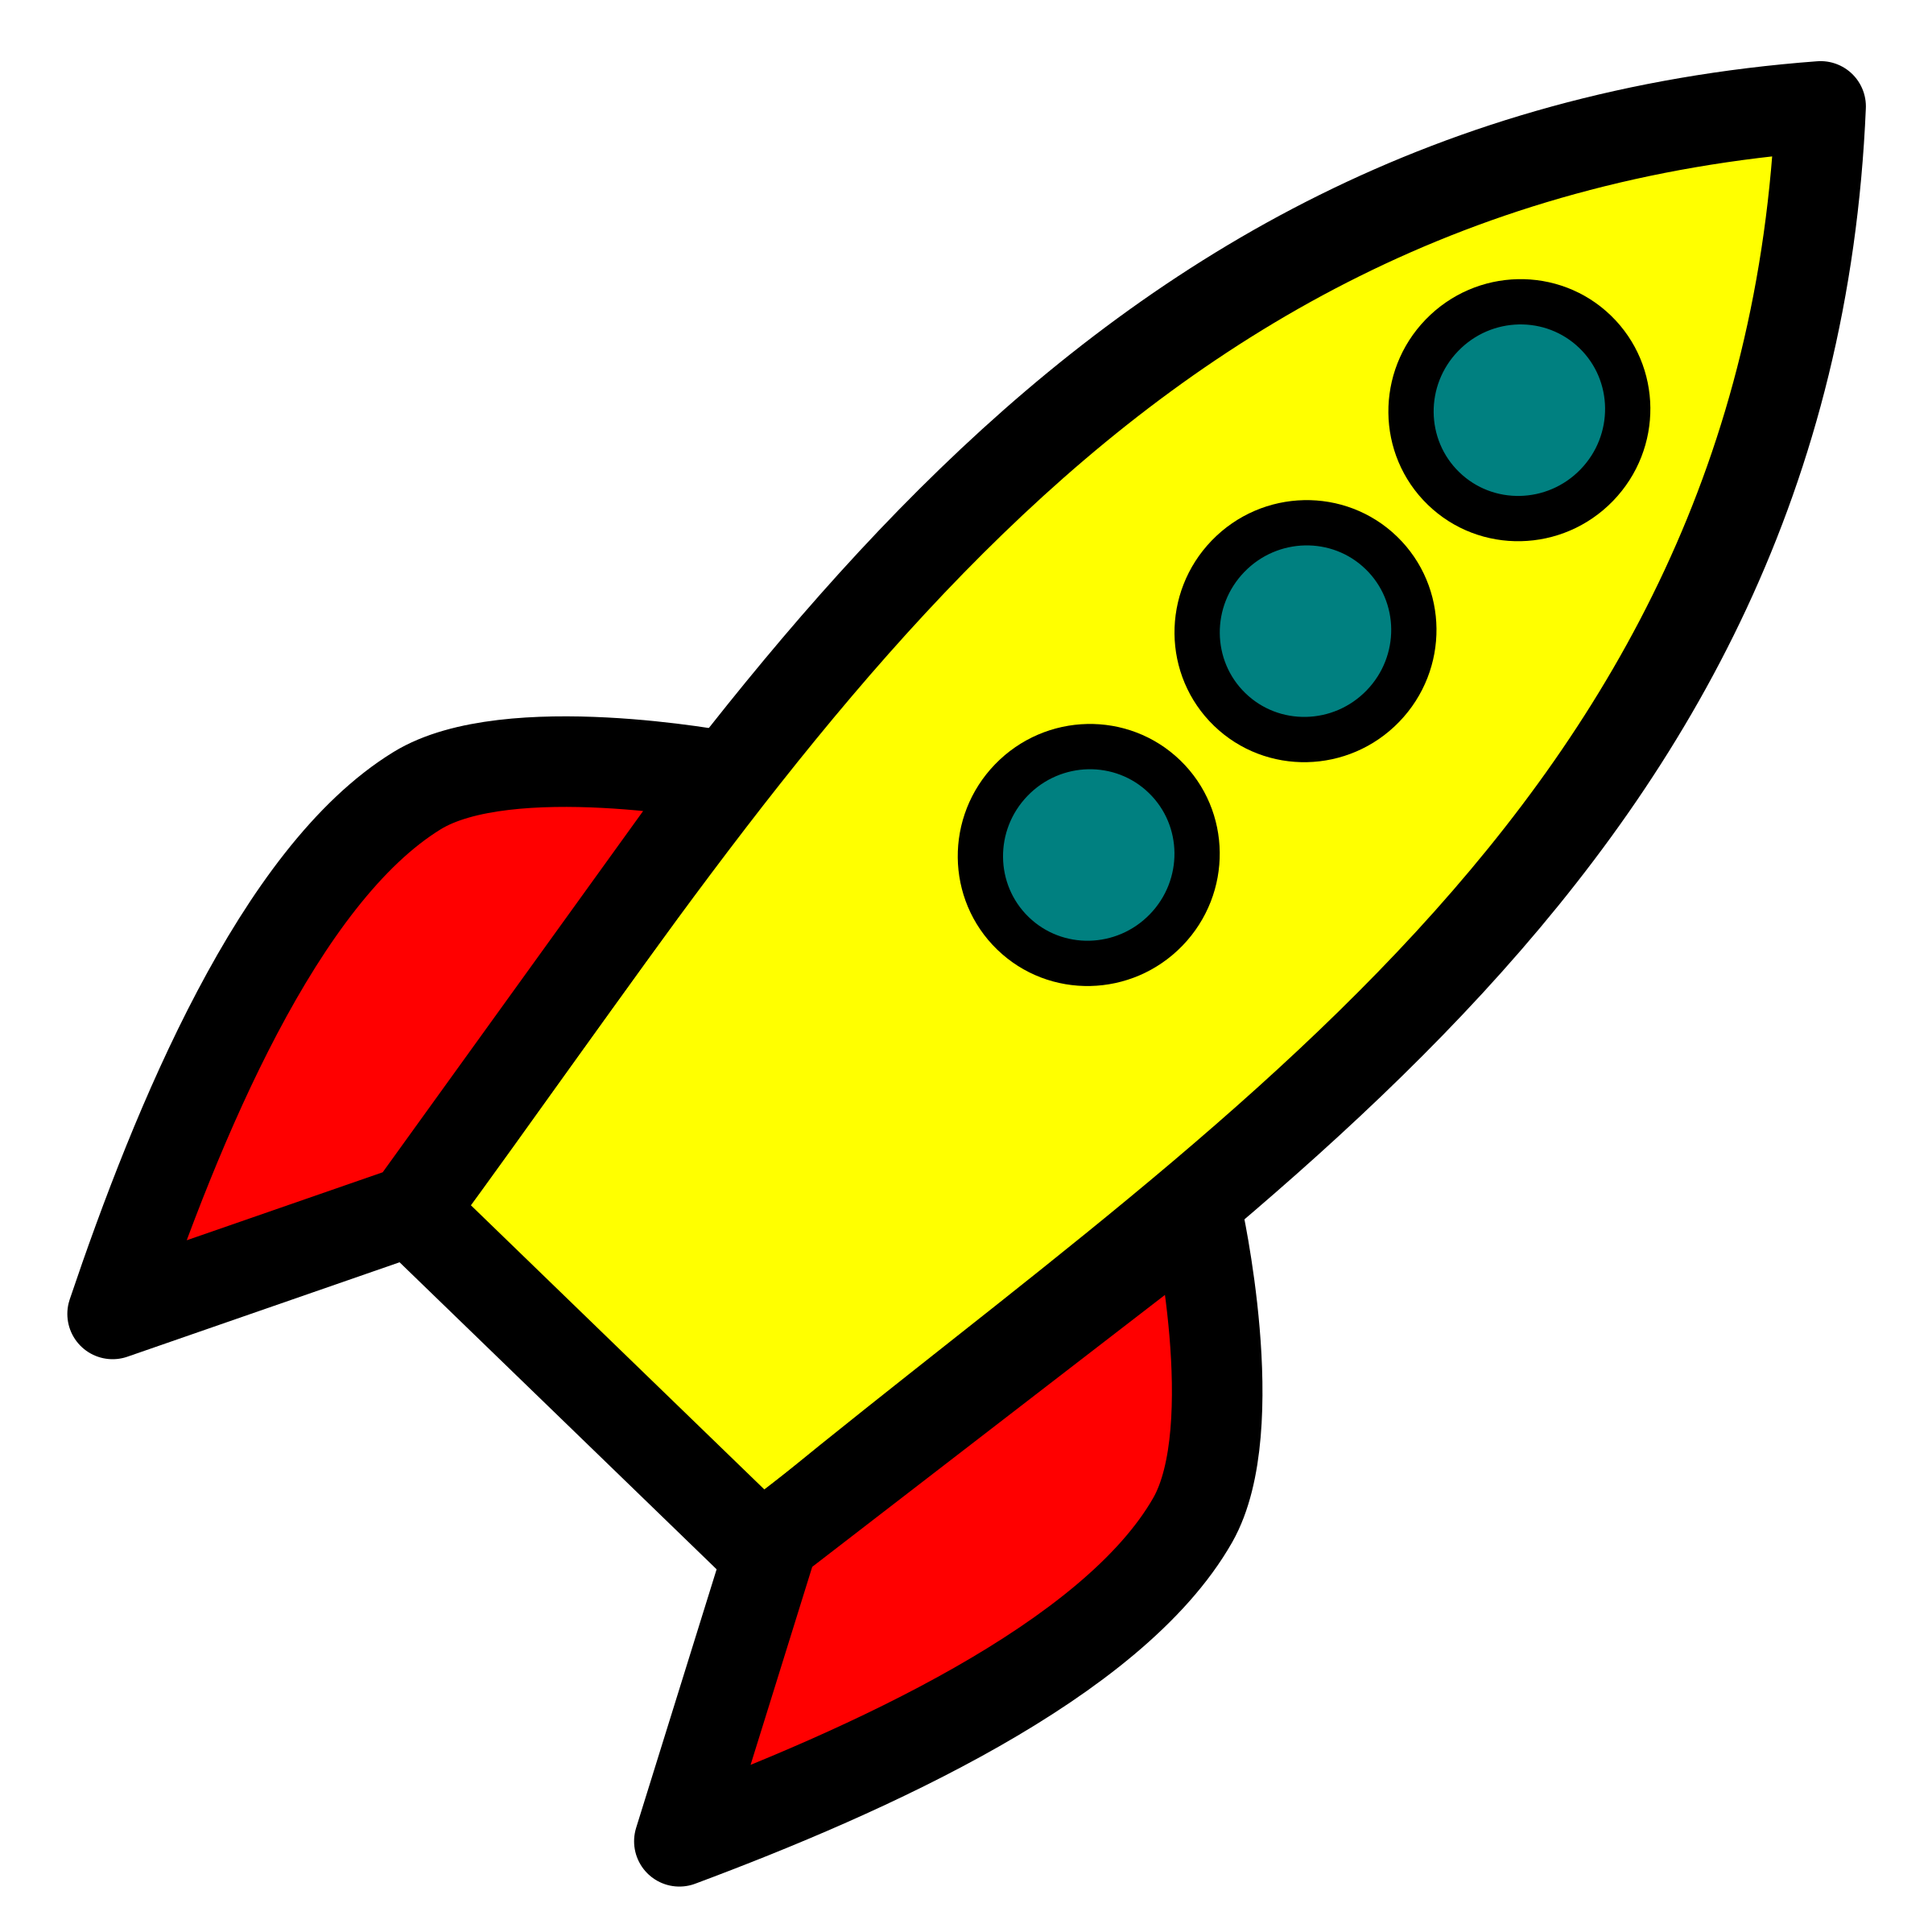 Red rocket icon. Spaceship clipart spacerocket